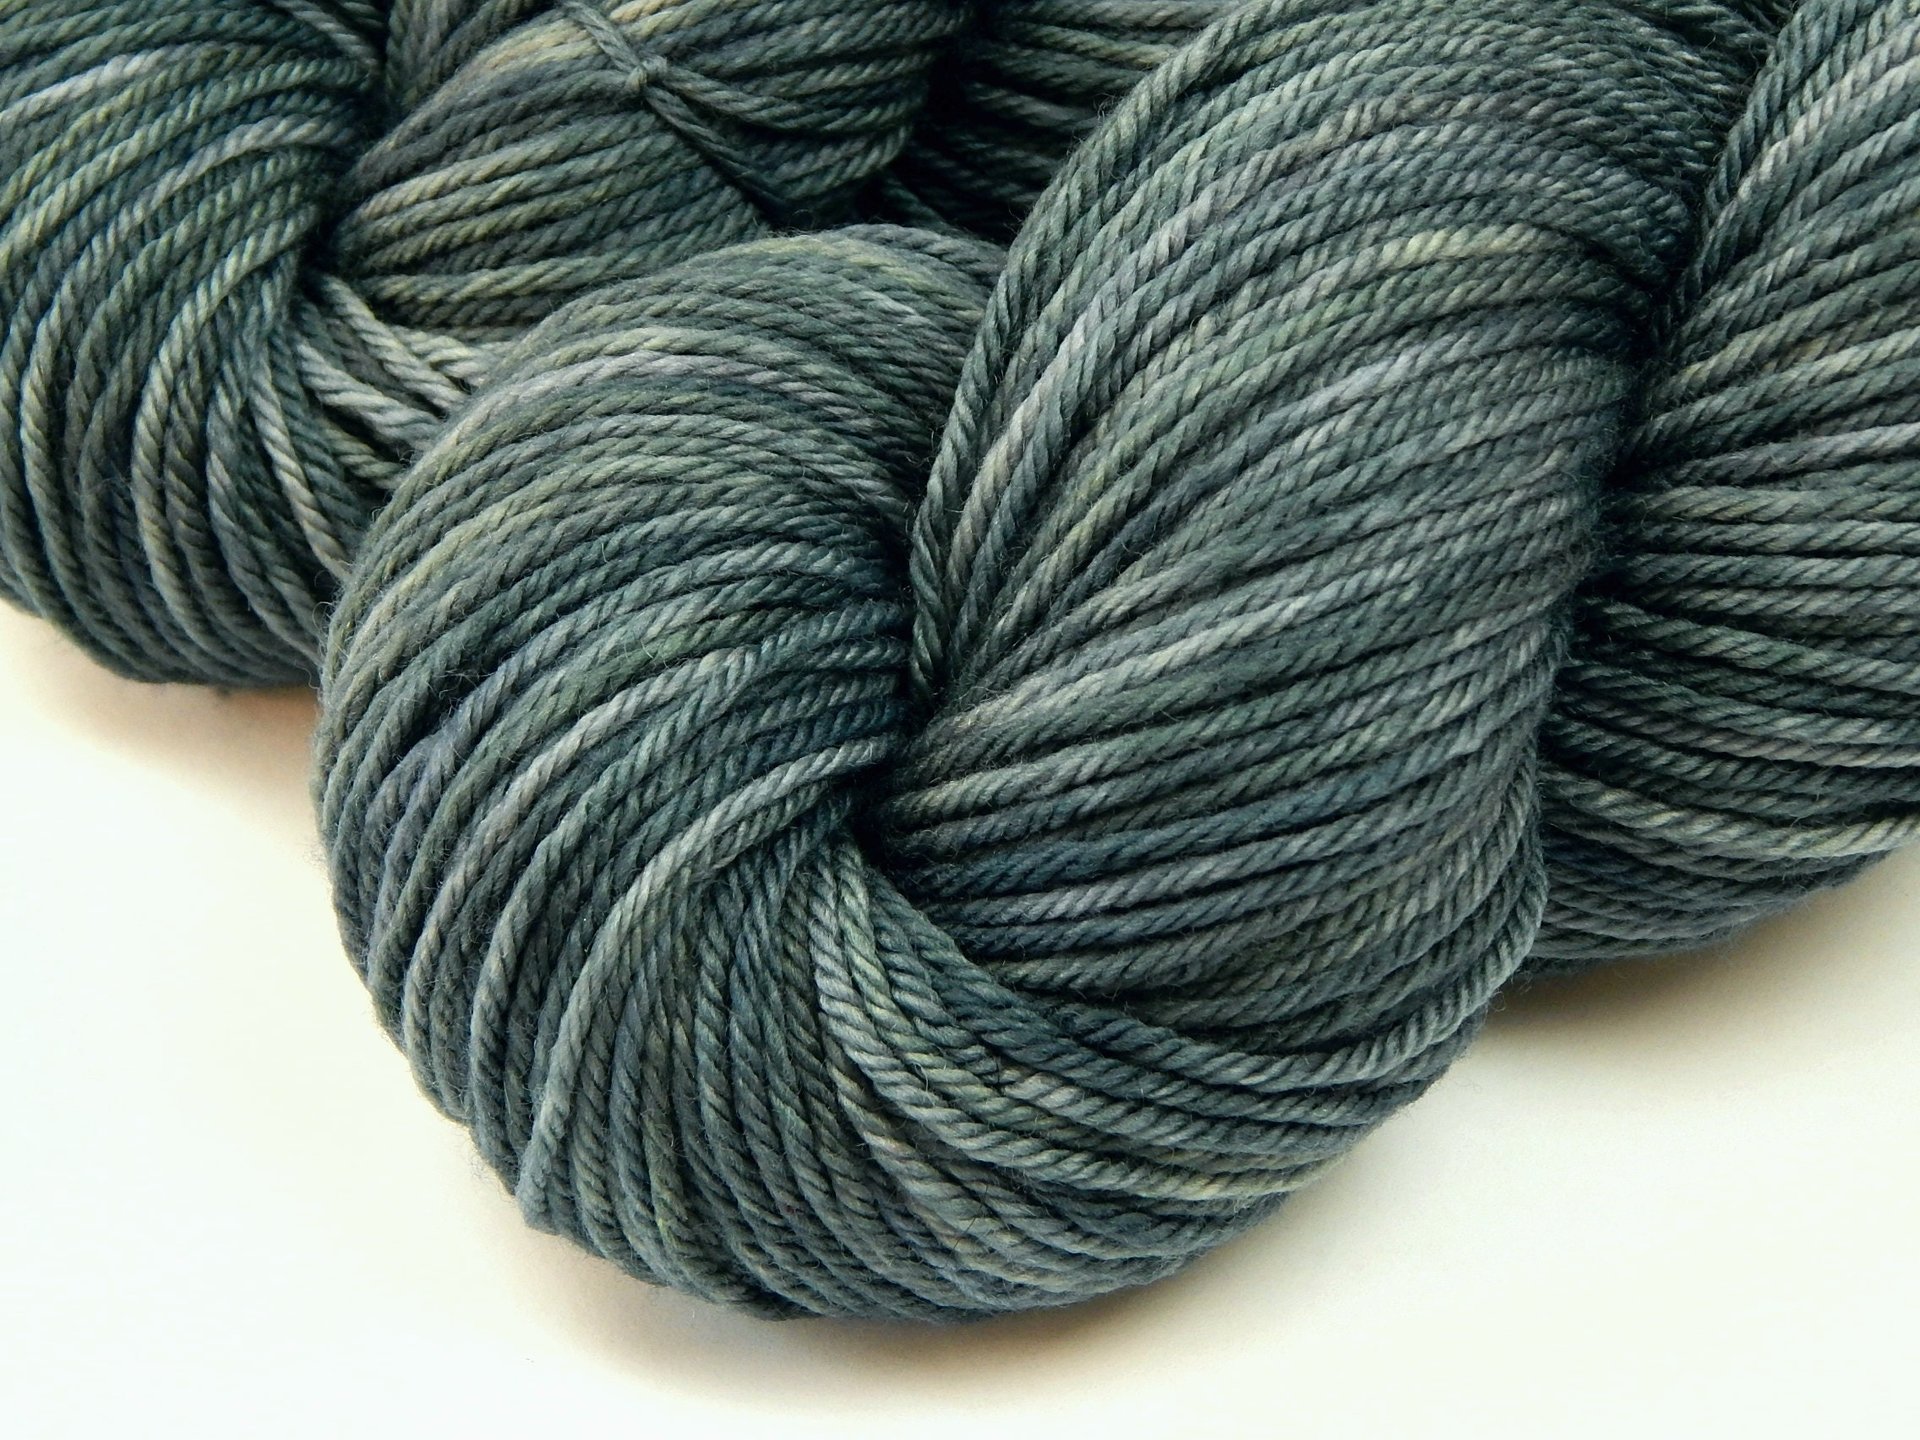 Hand Dyed Yarn, Worsted Weight 100% Superwash Merino Wool - Denim - Indie Dyer Knitting Yarn, Tonal Slate Blue Yarn Skein, Handdyed Yarn